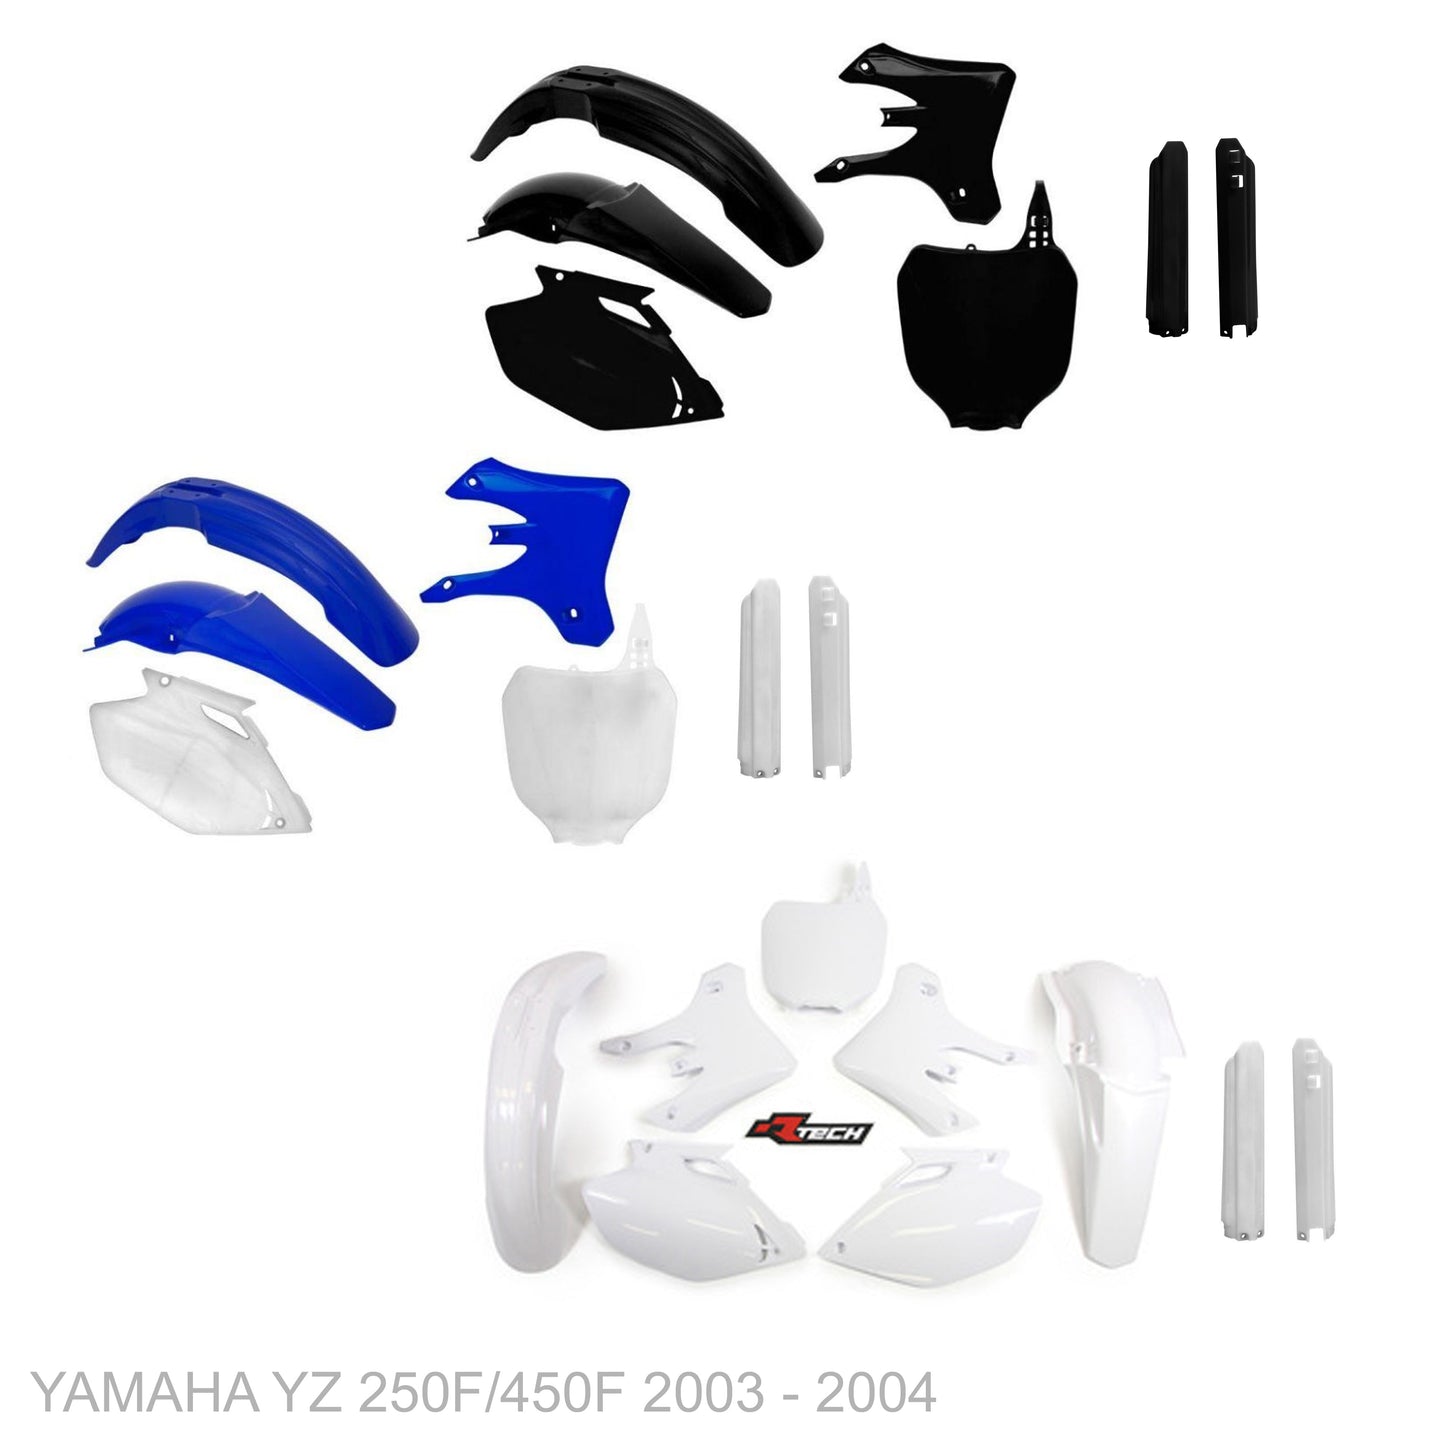 YAMAHA YZ 250F 2003 - 2004 WHITEOUT Graphics kit